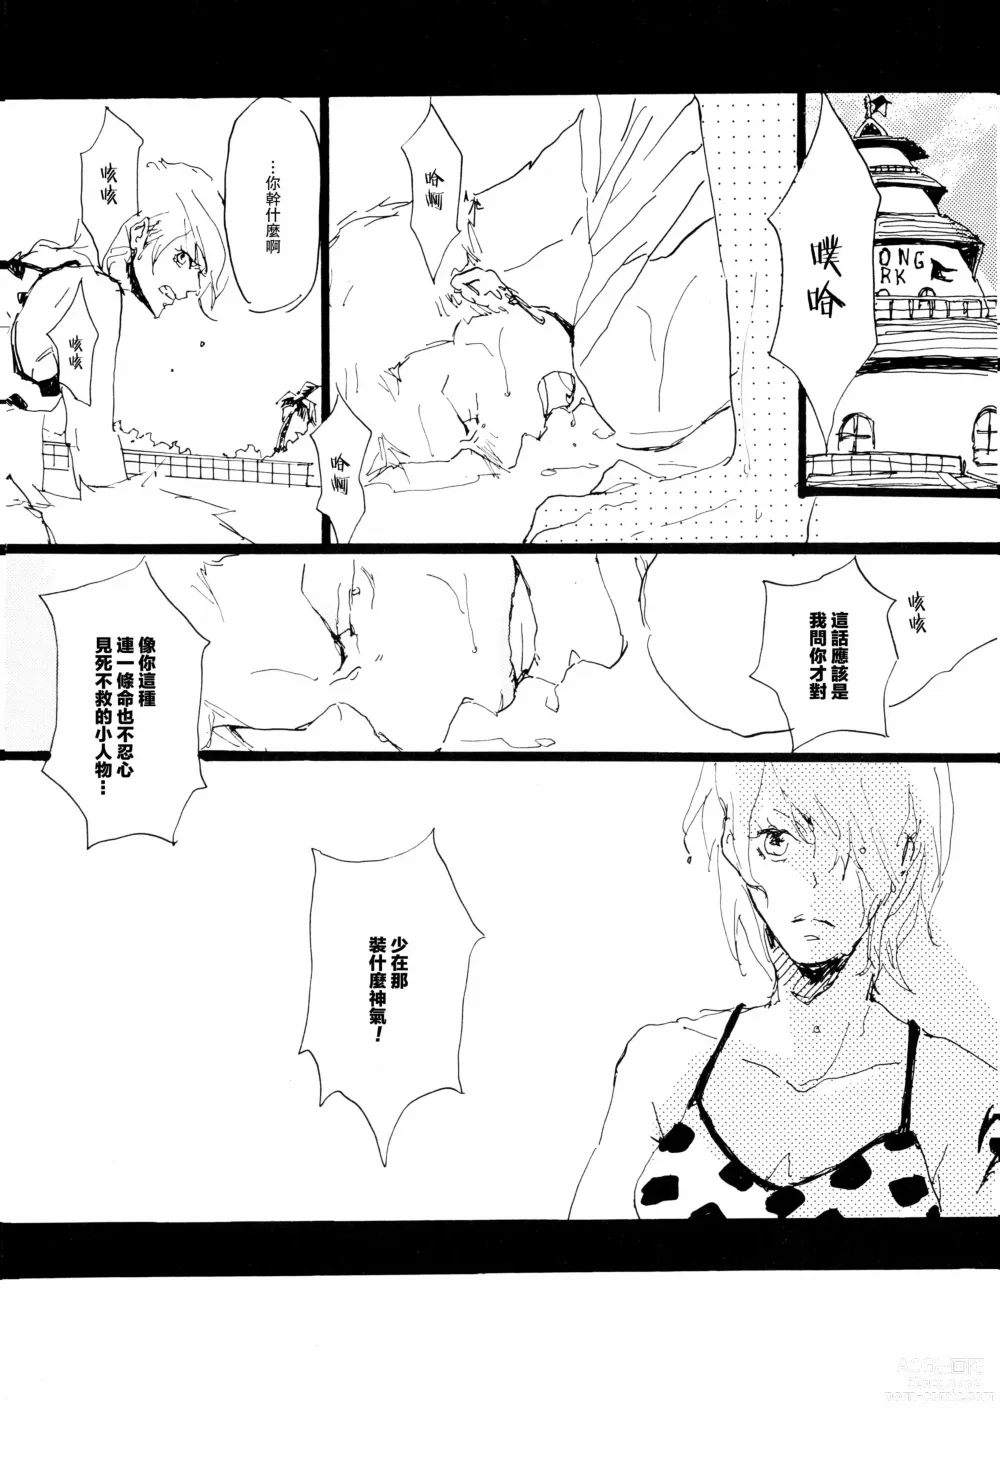 Page 3 of doujinshi Aquakiara